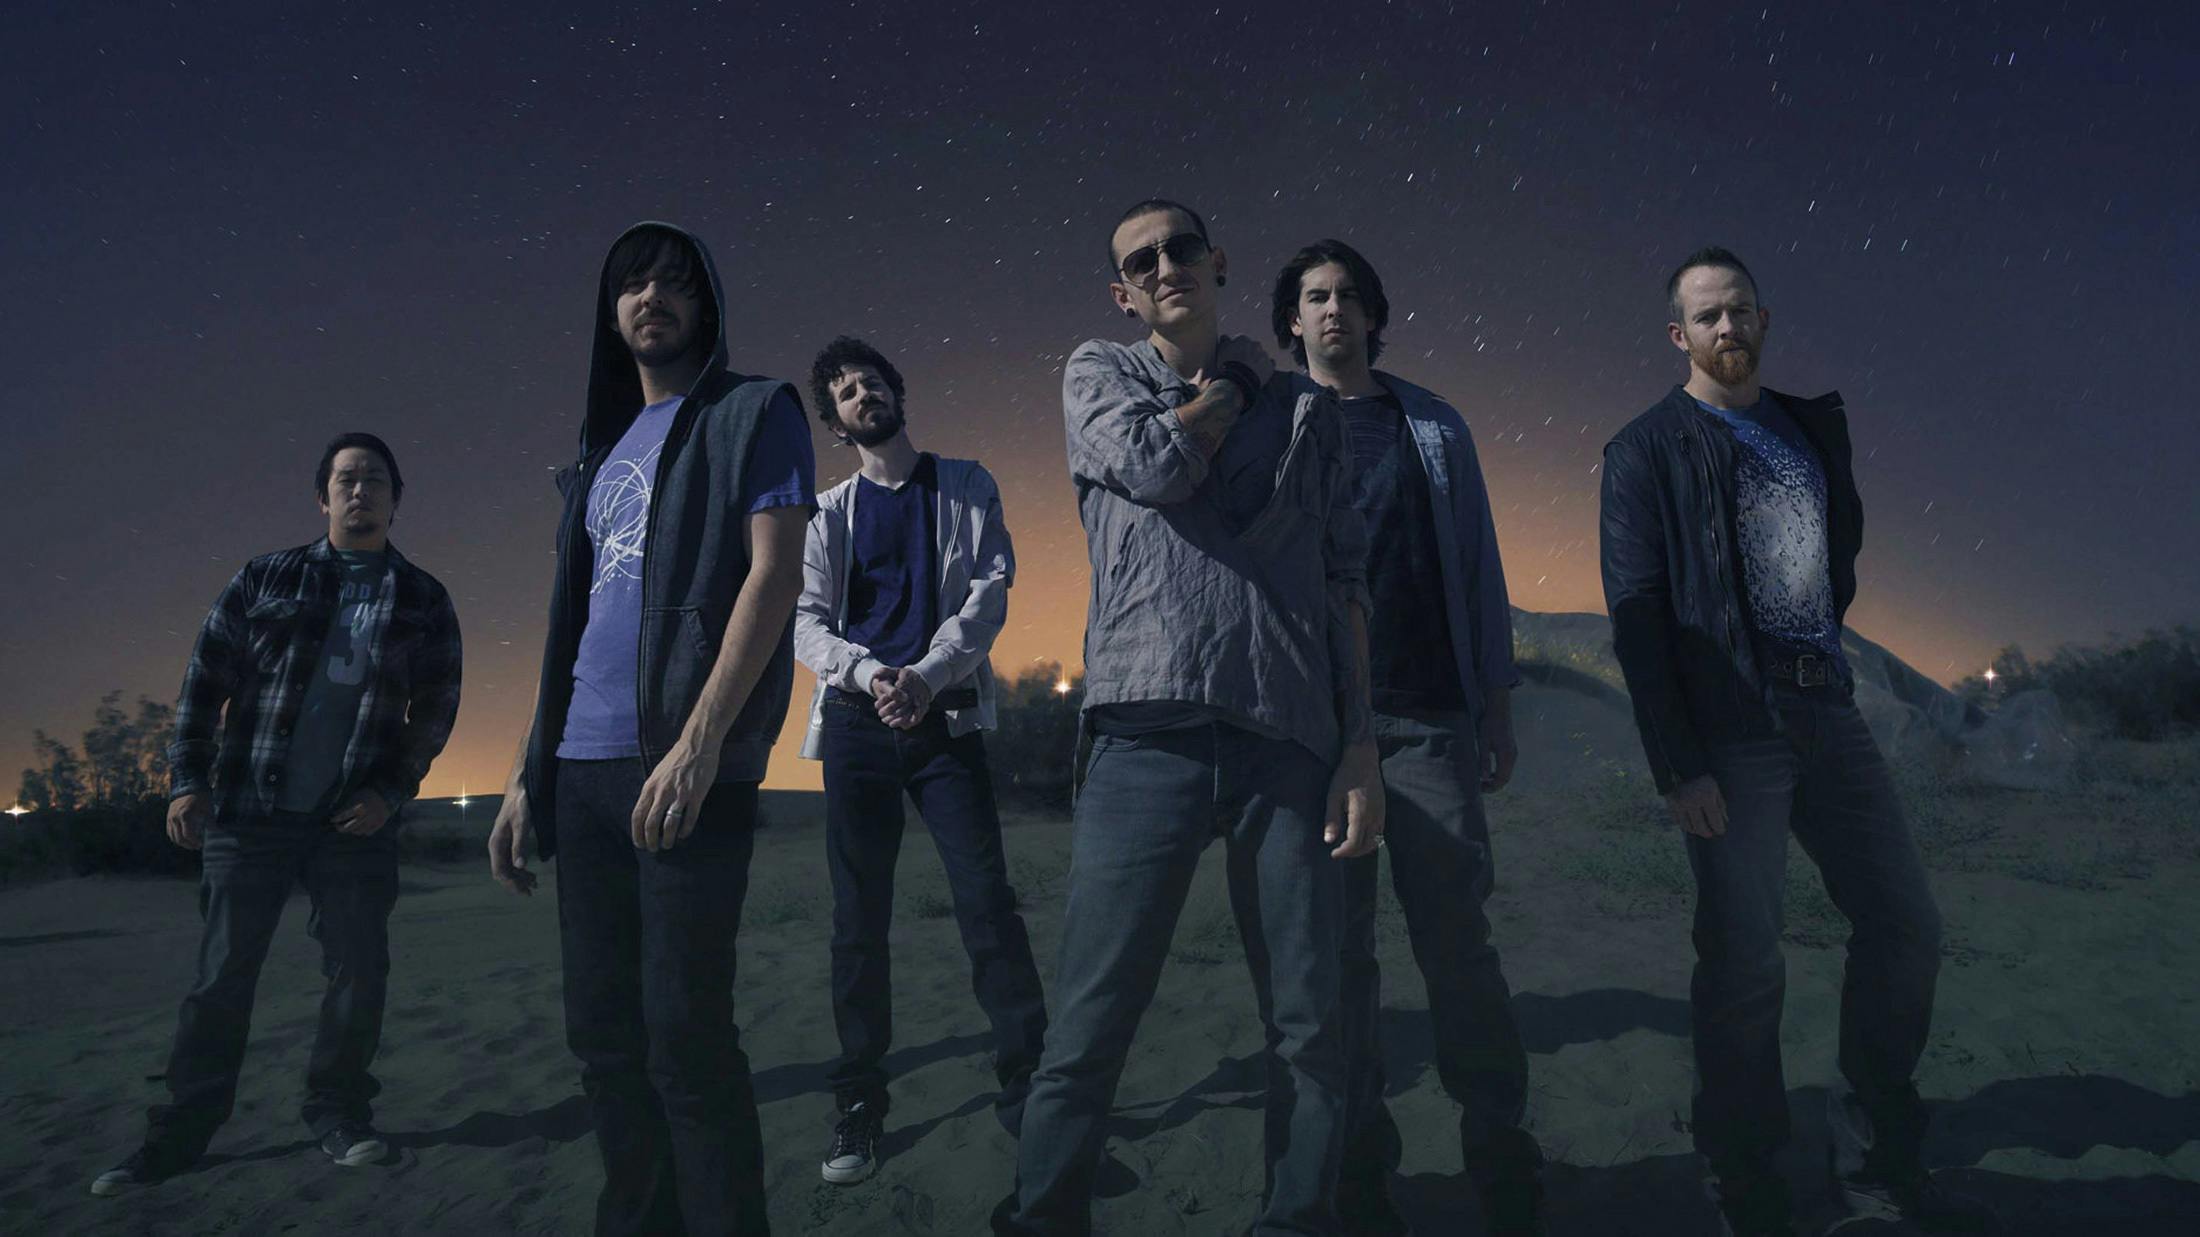 Mike Shinoda reflects on Linkin Park's most "polarising" album